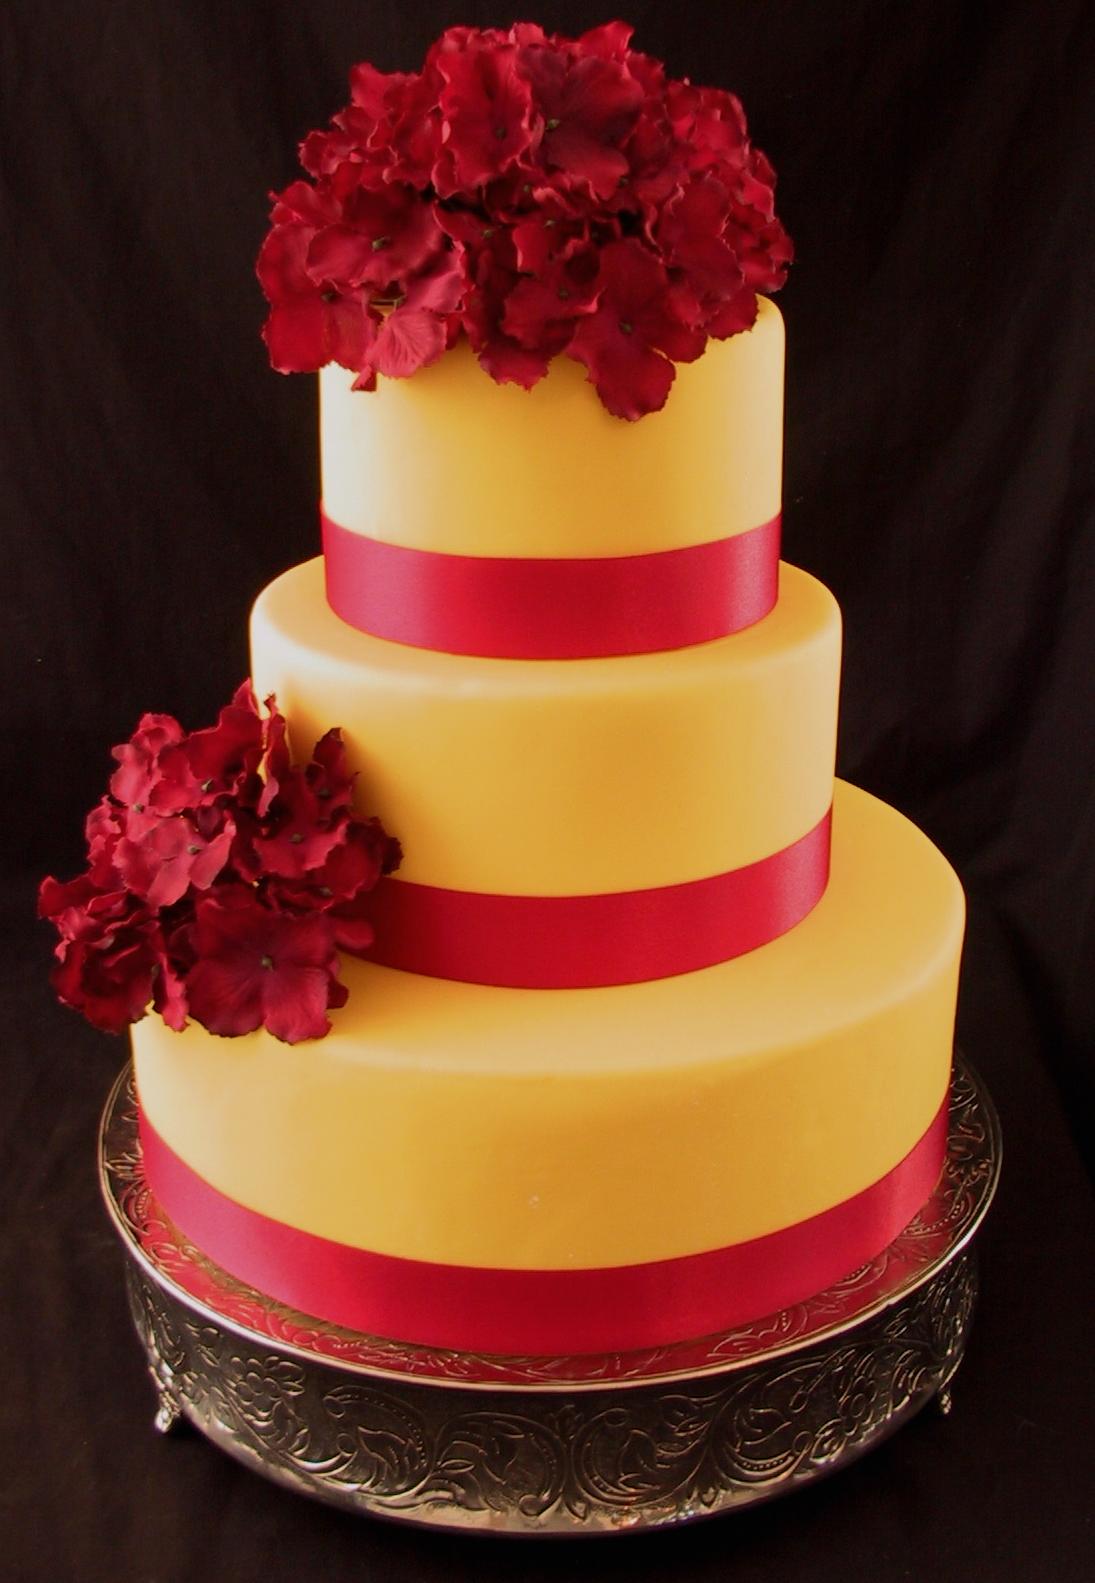 This fall themed wedding cake